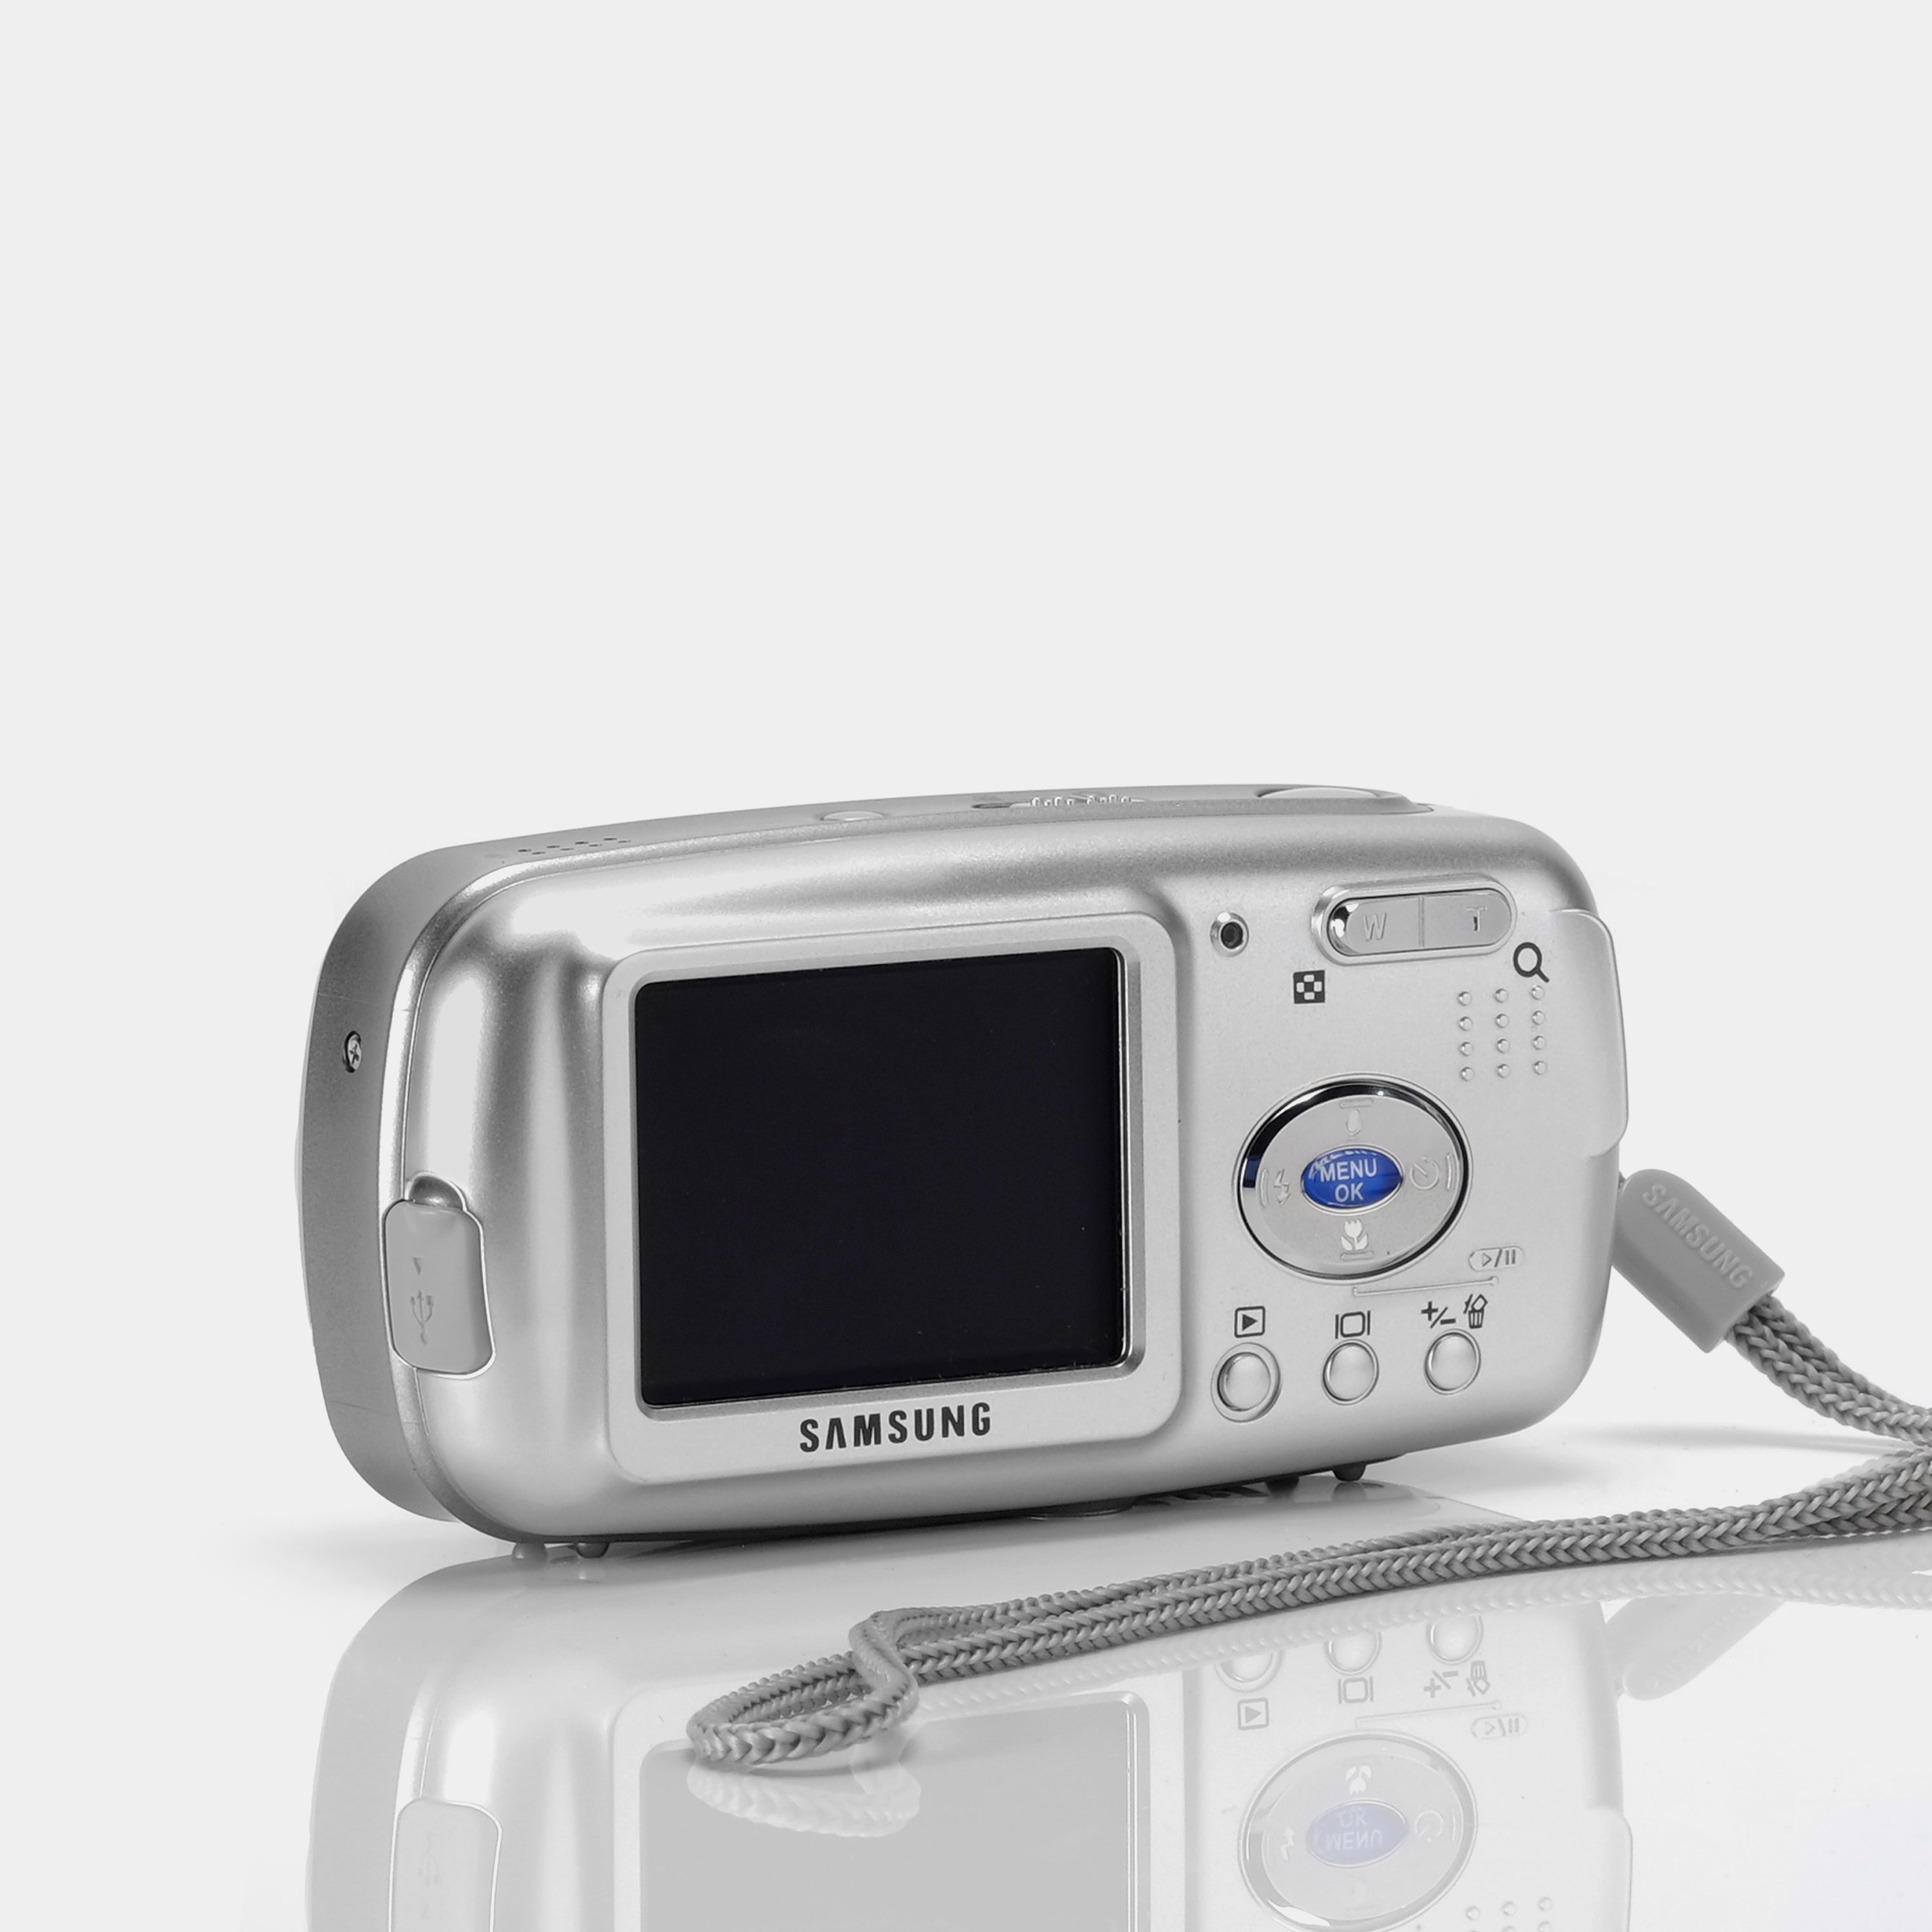 Samsung Digimax A400 Point and Shoot Digital Camera